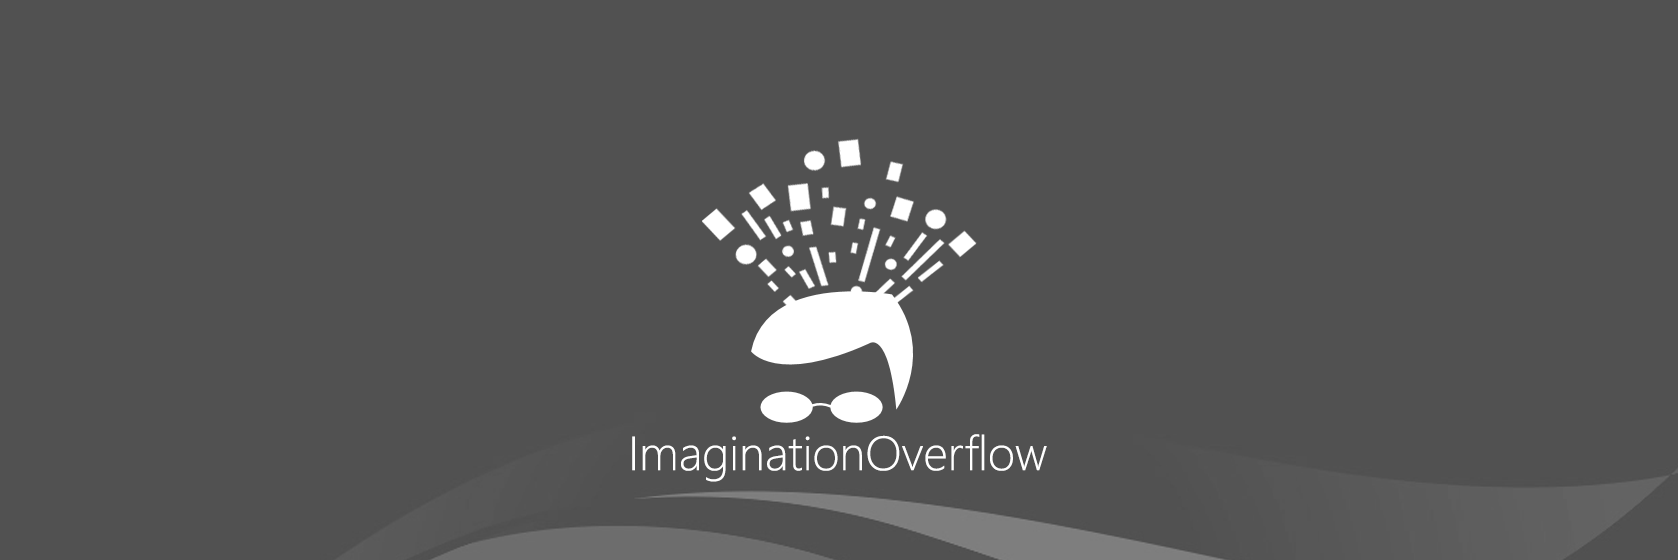 Imagination
  Overflow